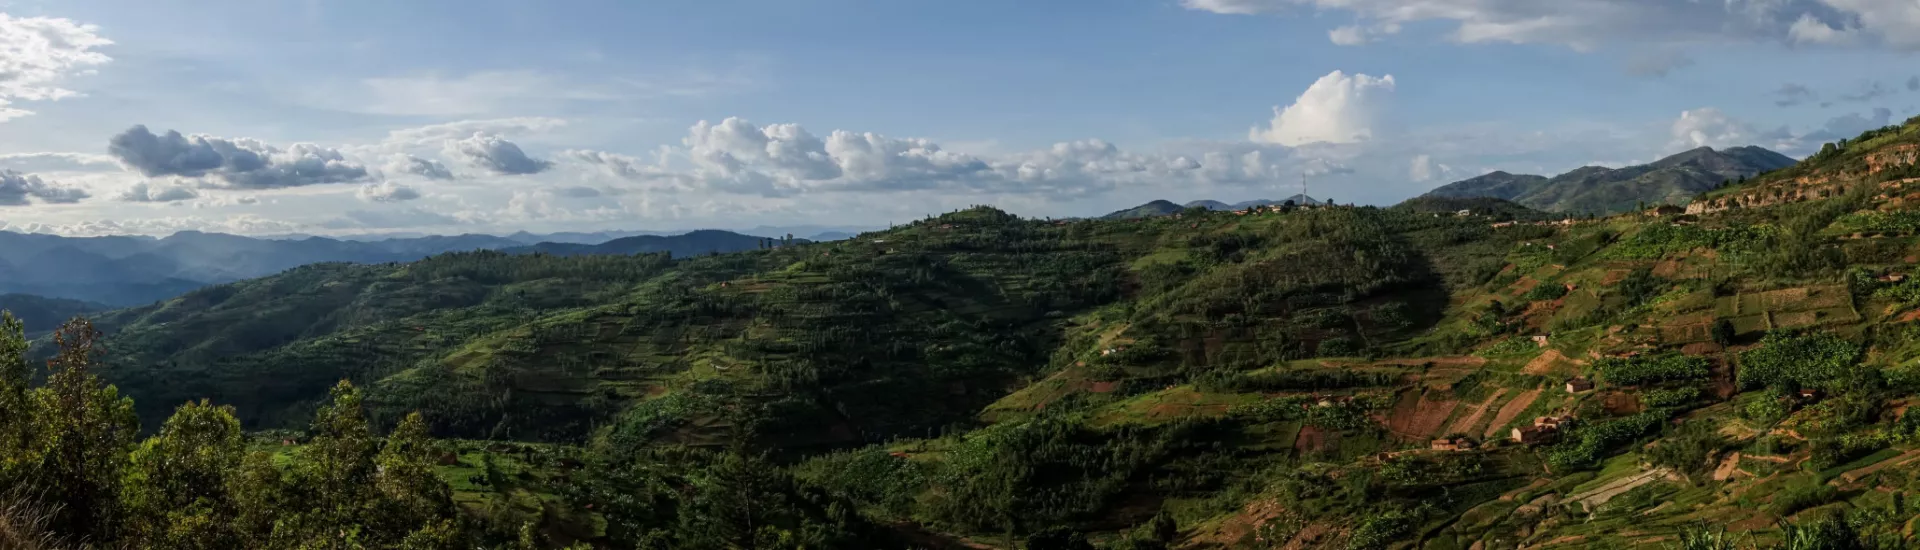 Hills of Rwanda, Rwanda, Africa